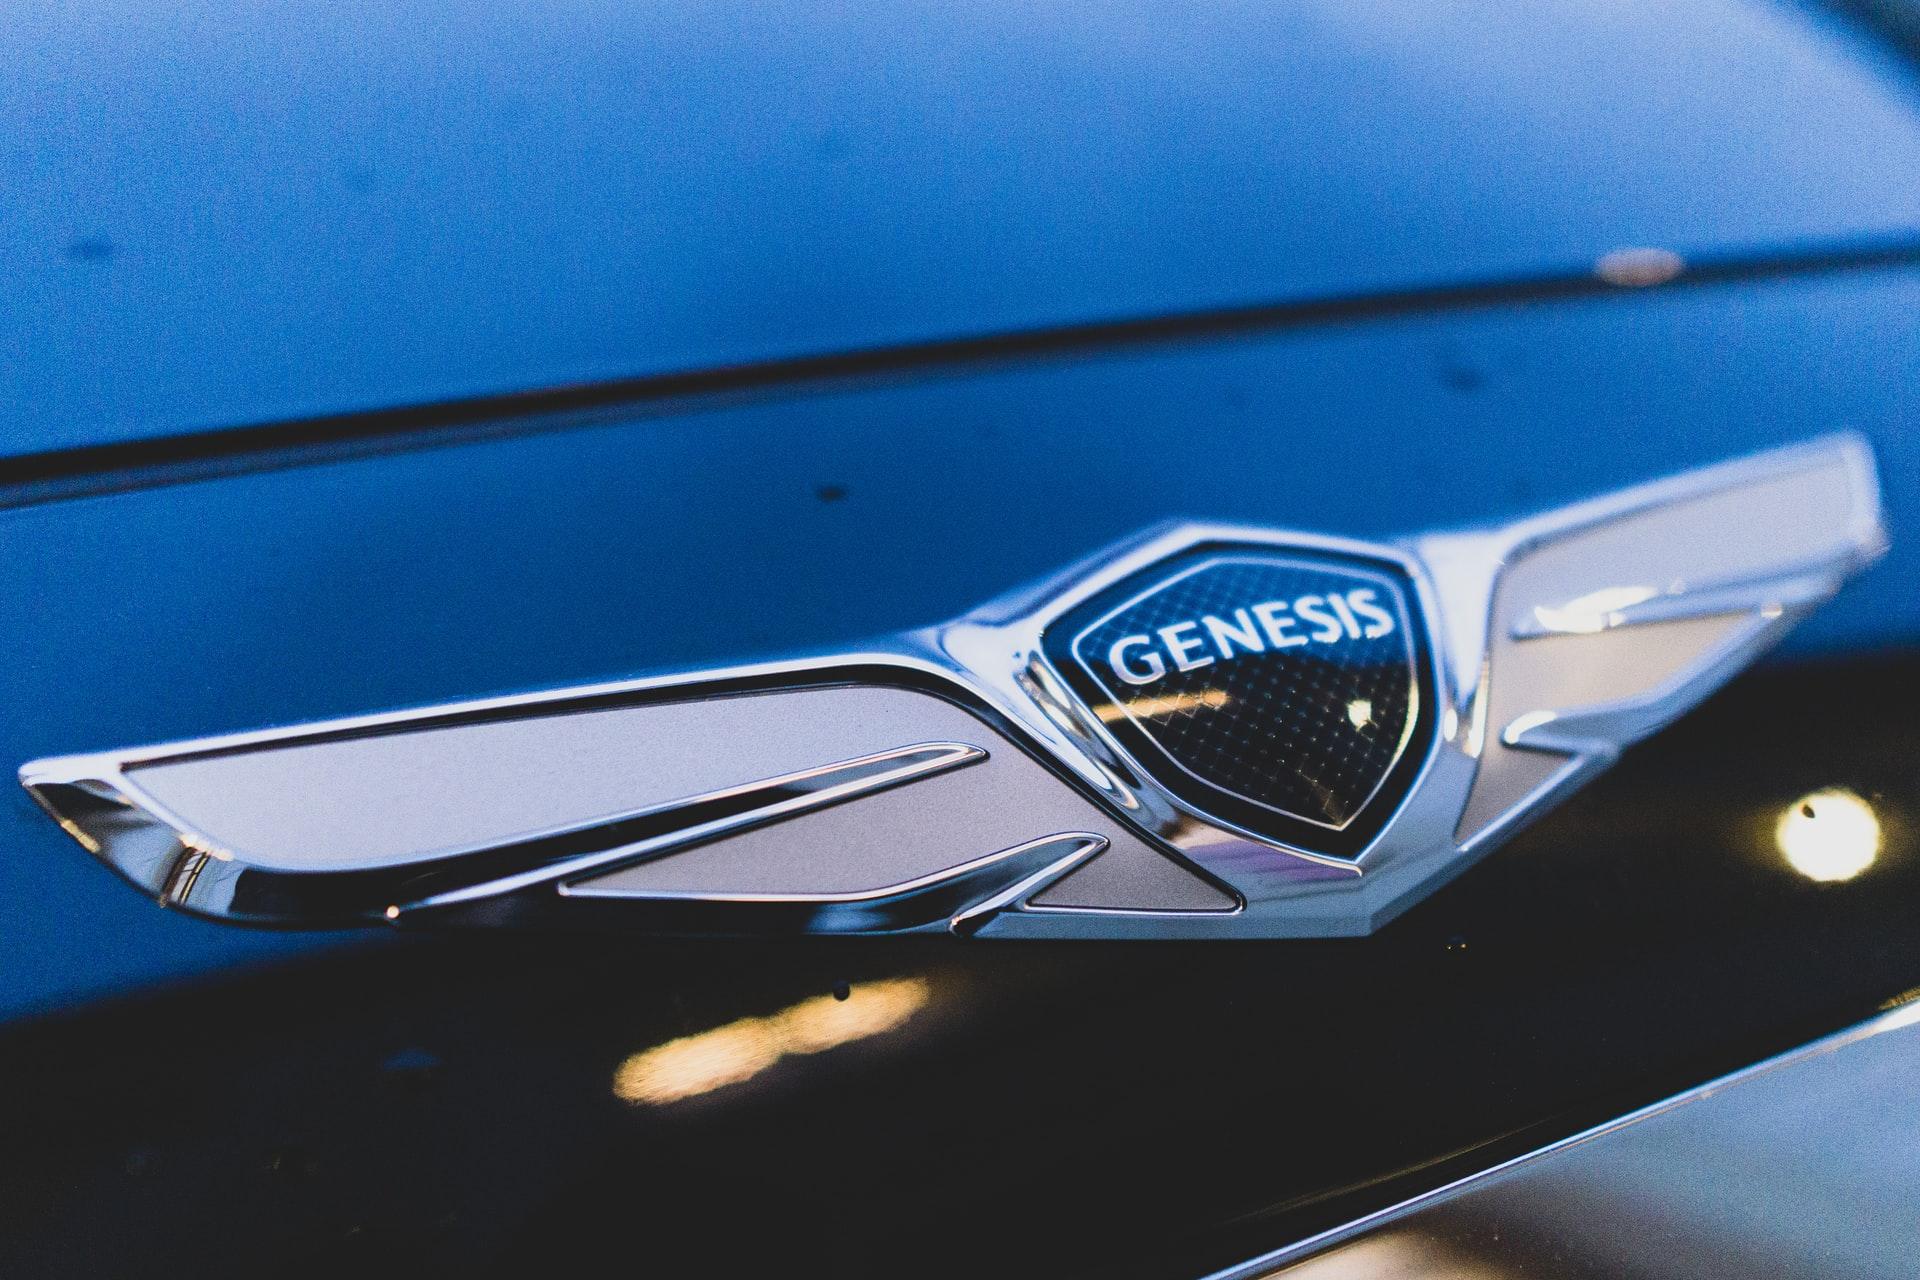  Hyundai’s Genesis Motor group offers hard-to-beat warranties on their new cars.